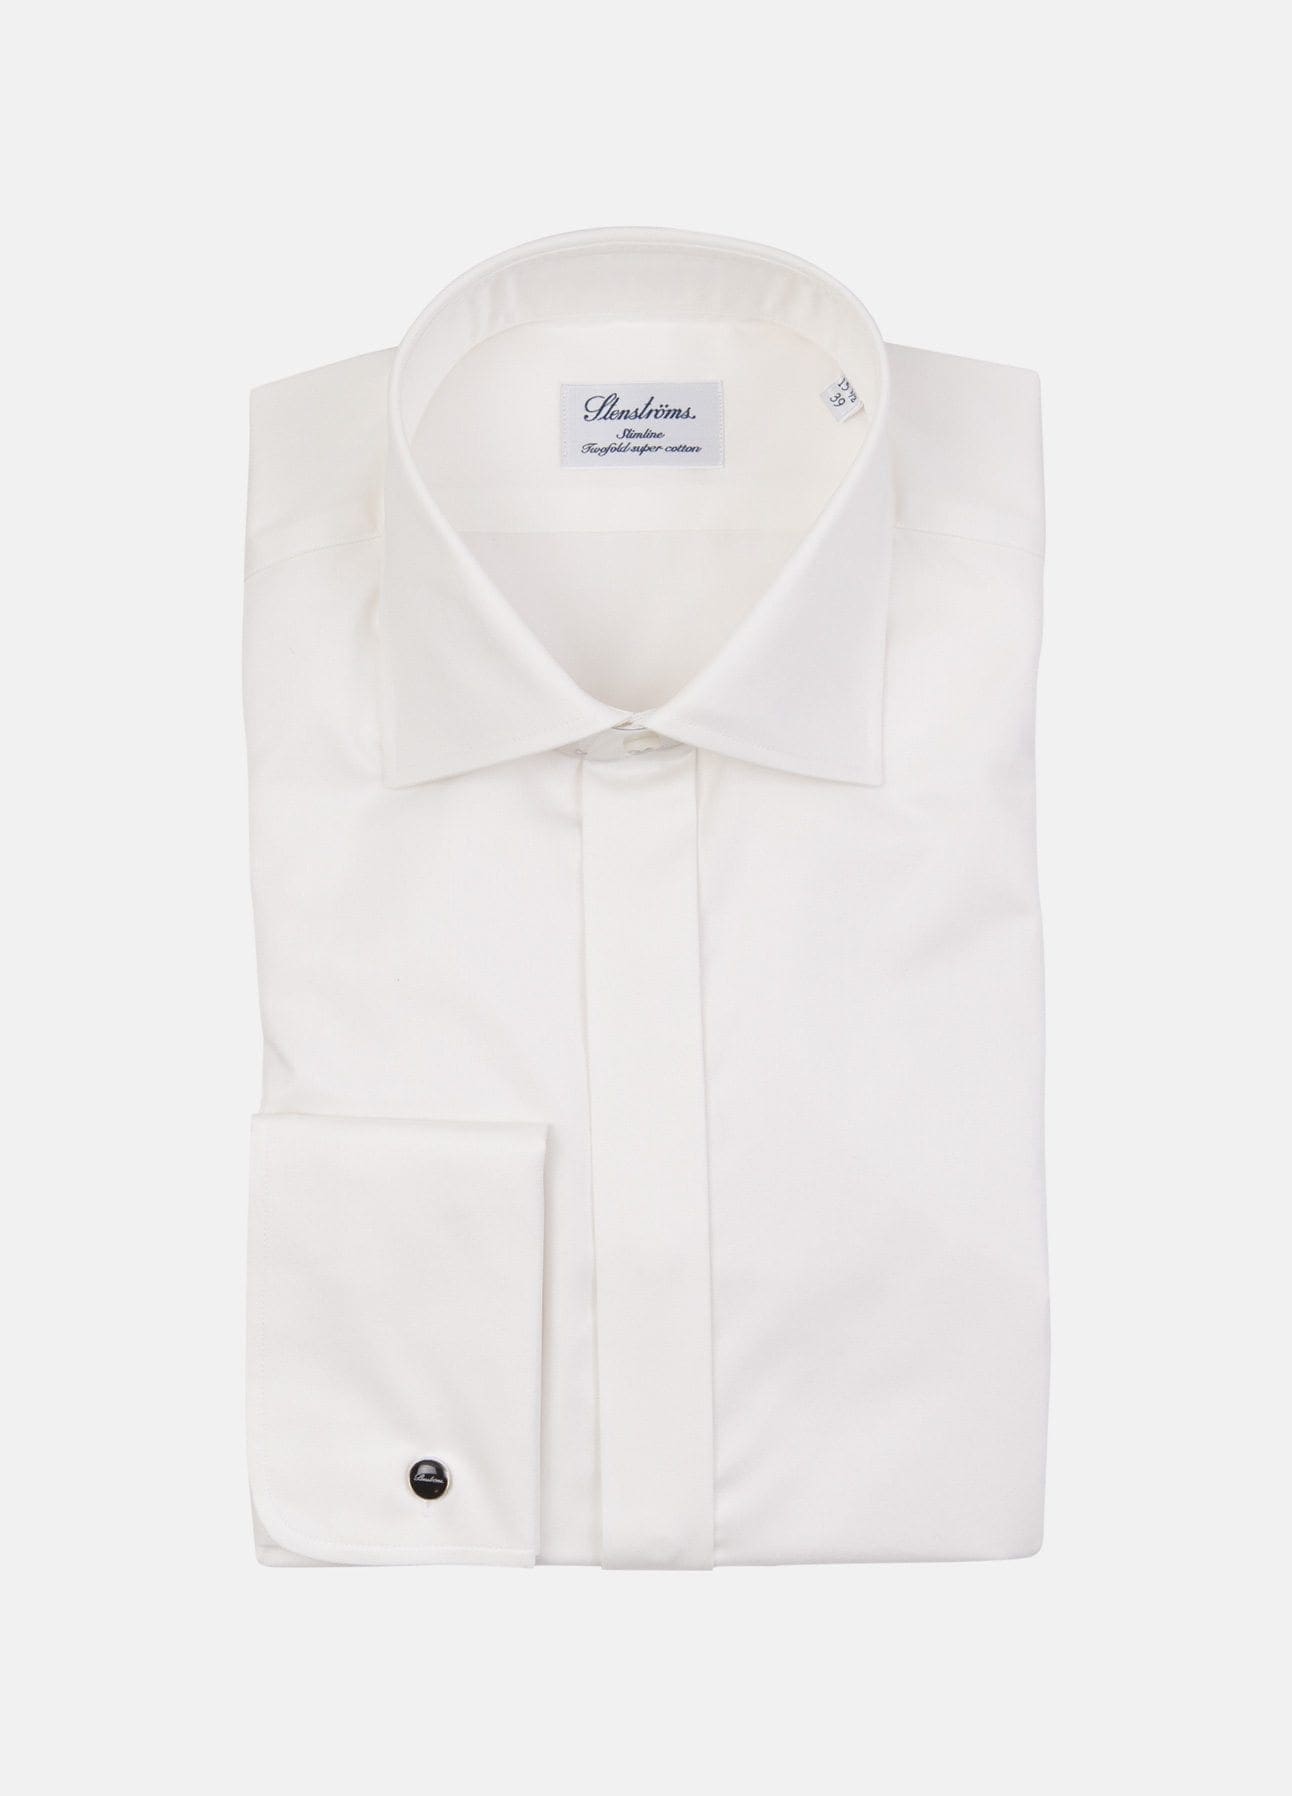 Offwhite slimline smokingskjorte fra Stenströms